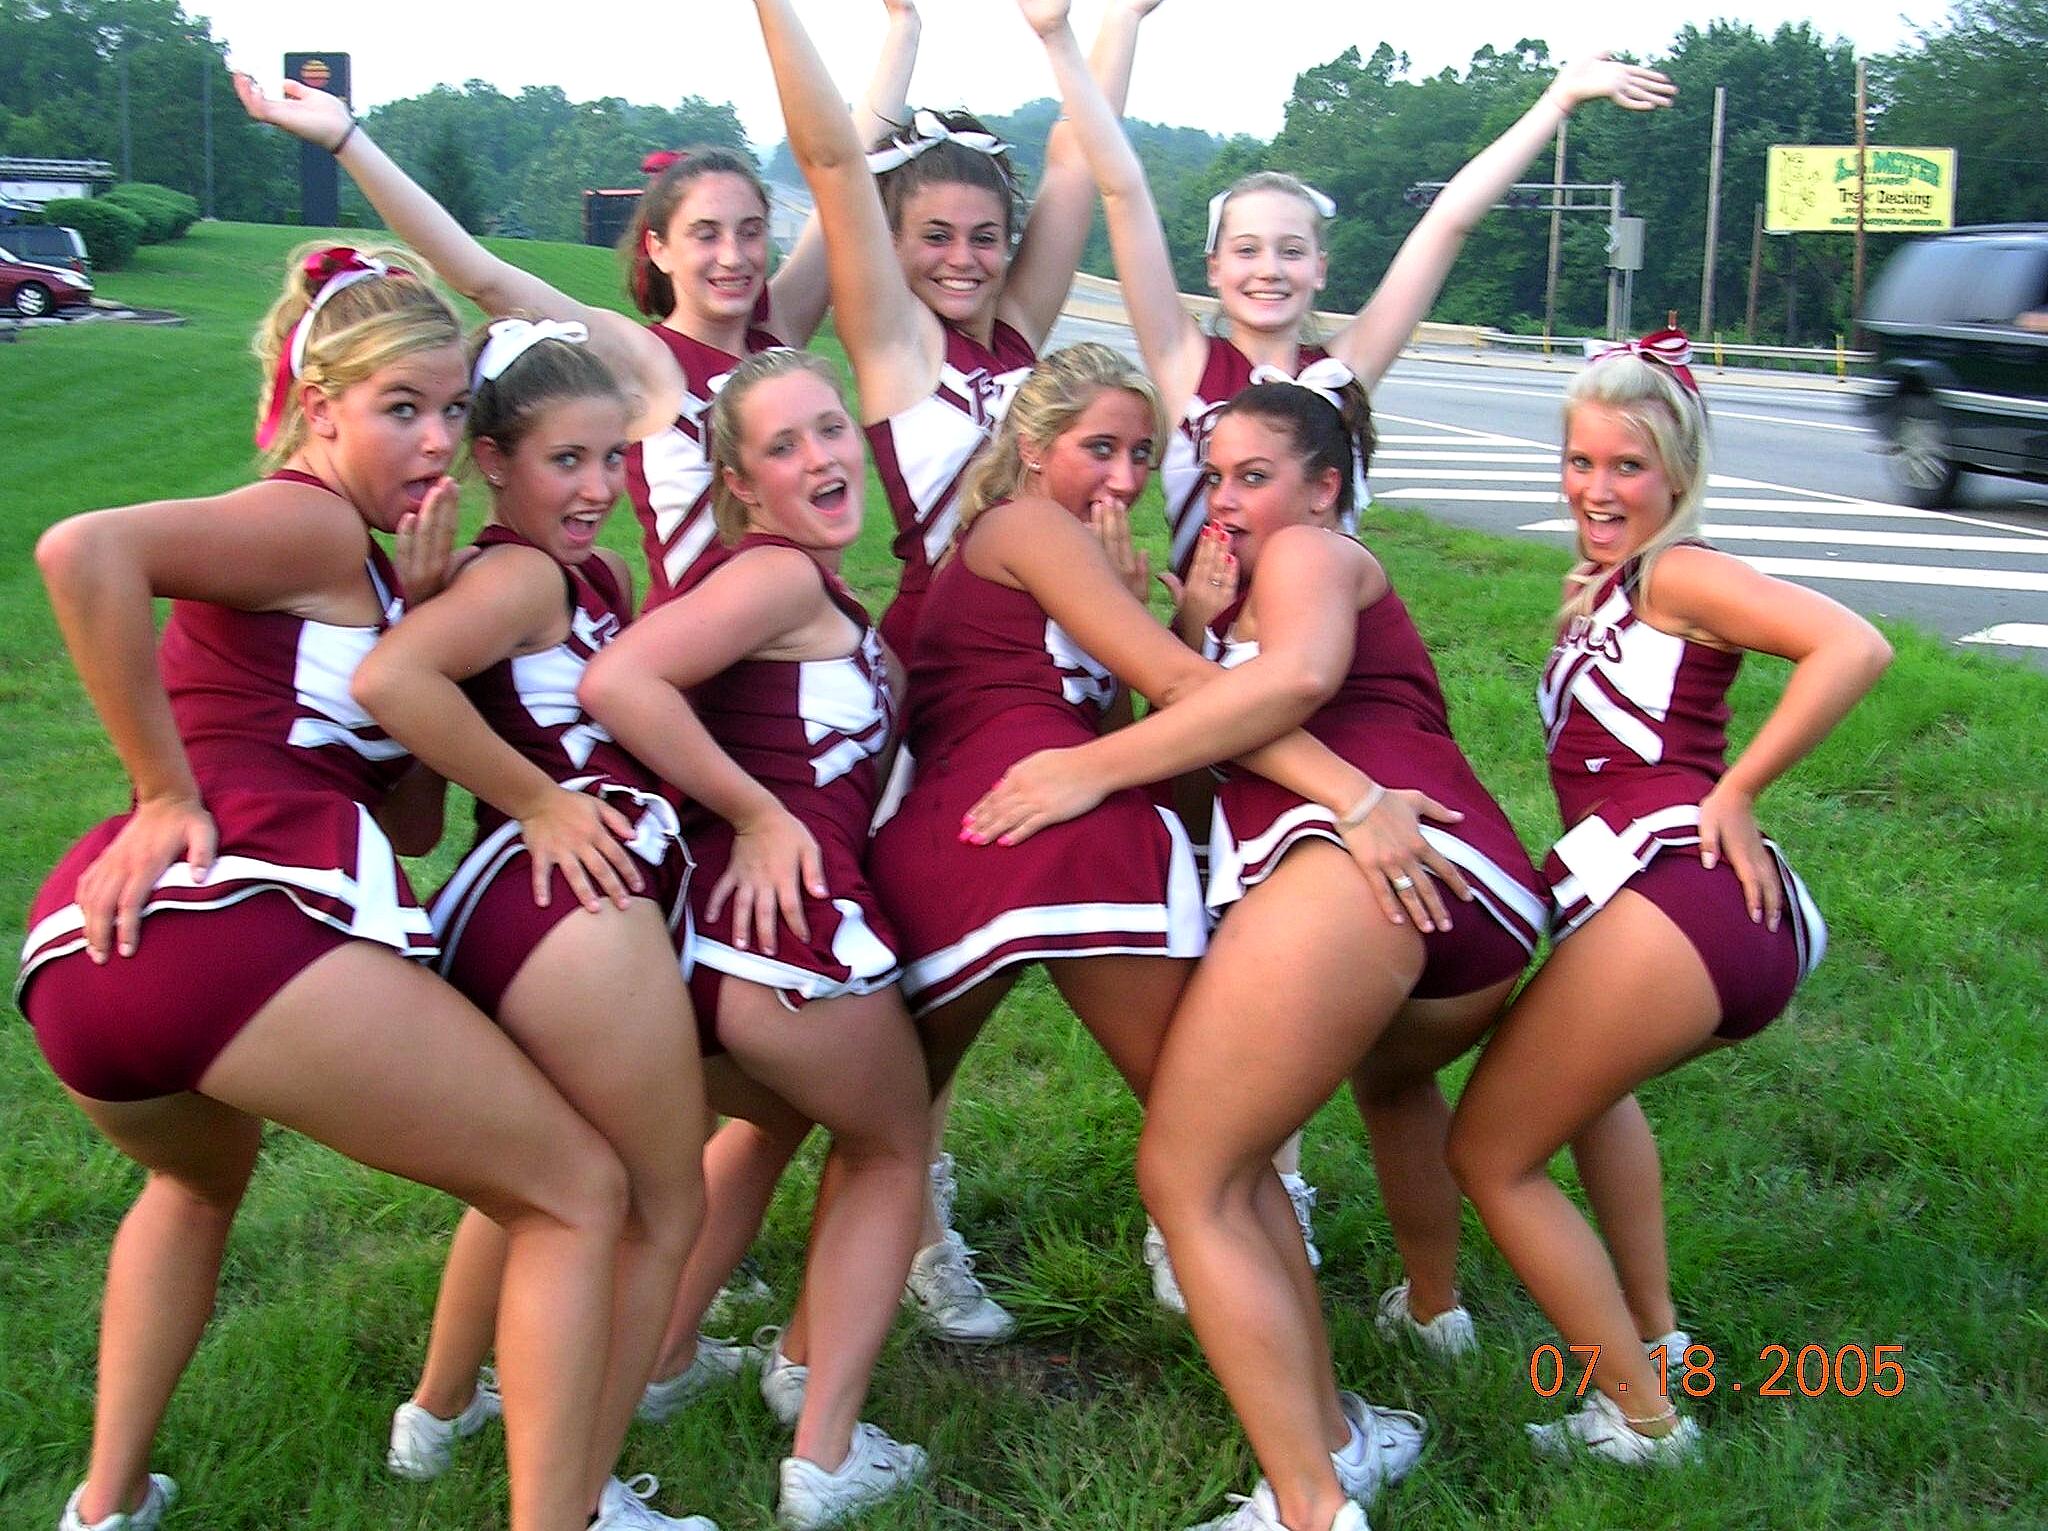 Cheerleaders upskirt pics hq pic